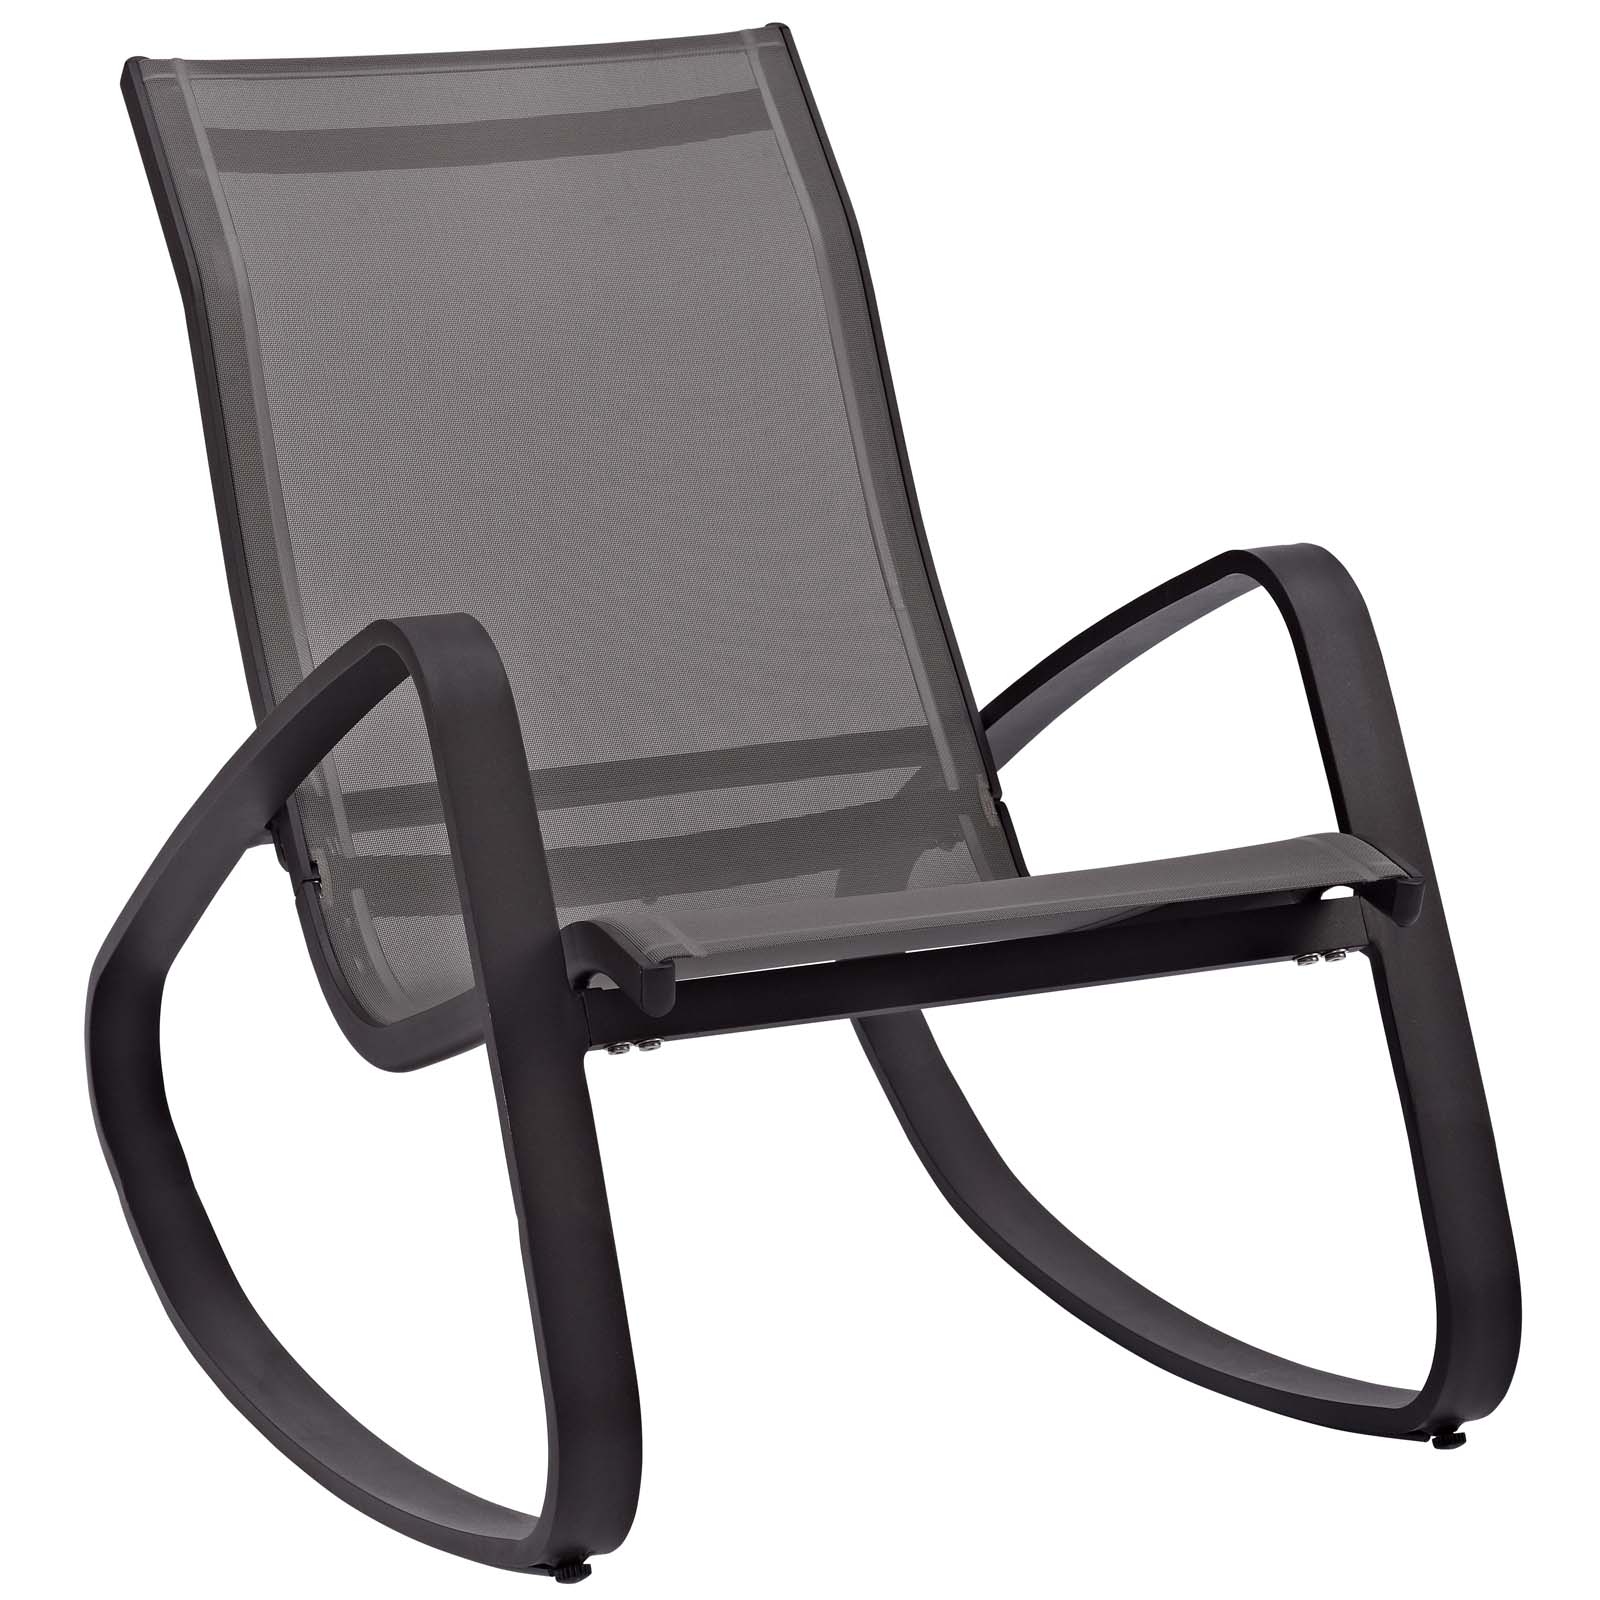 Modern Contemporary Urban Design Outdoor Patio Balcony Garden Furniture Locking Lounge Chair Armchair, Aluminum Metal Steel, Multi Black - image 1 of 6